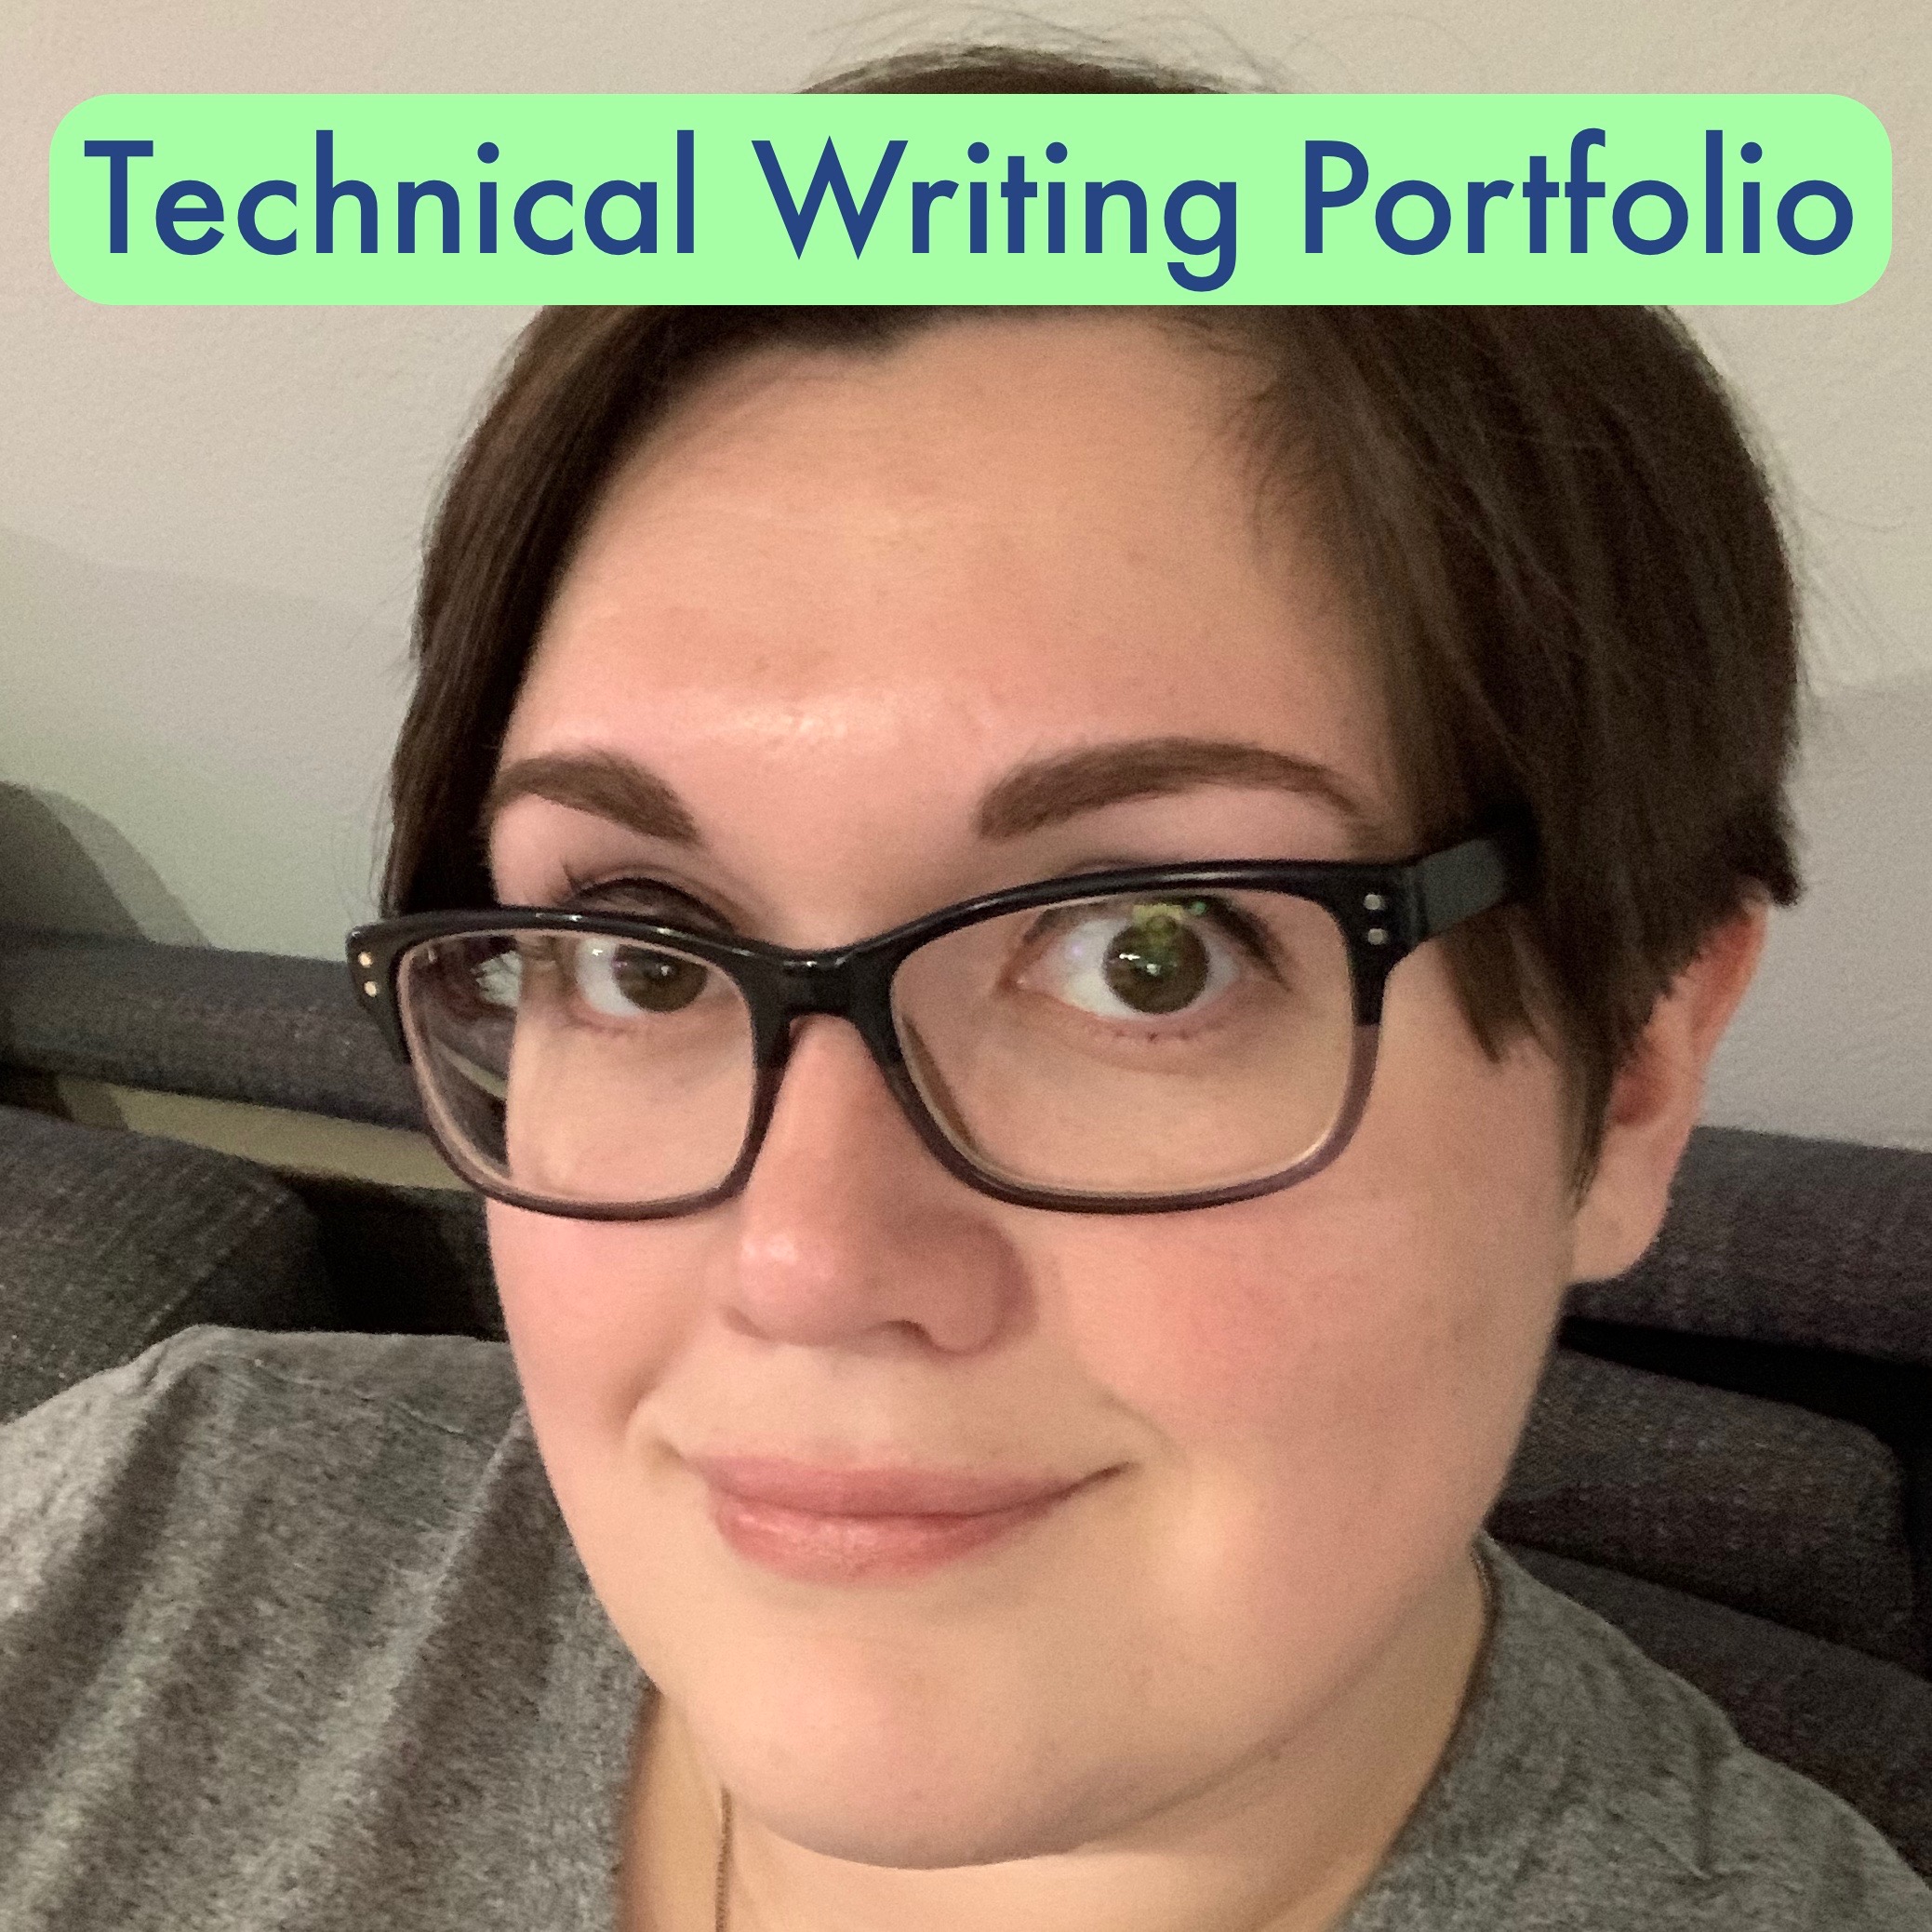 Technical Writing Portfolio